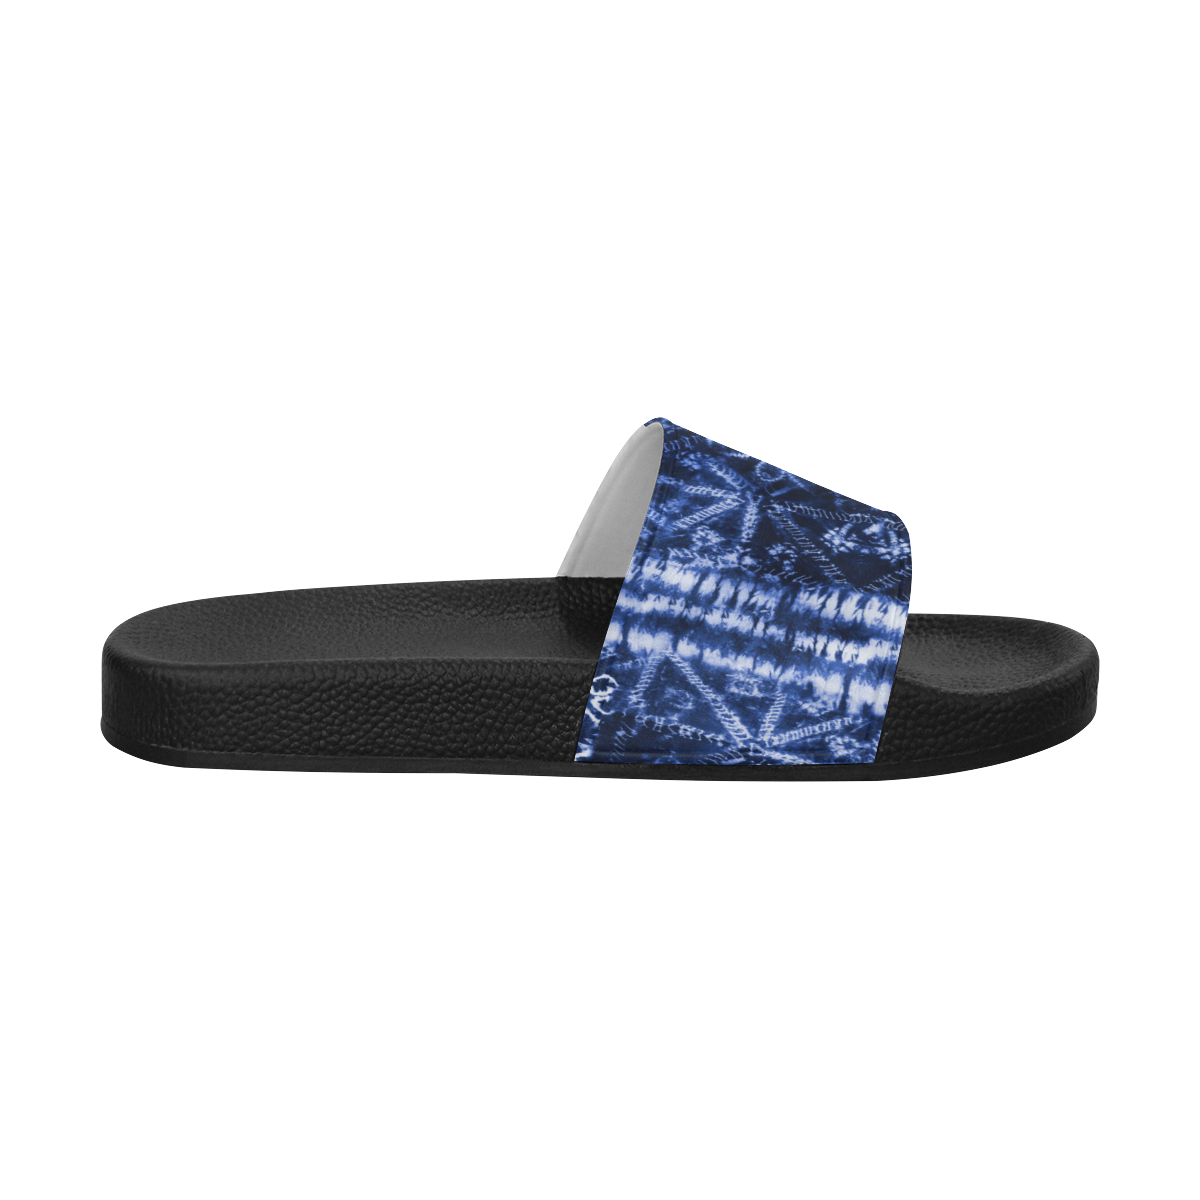 Blue Shibori Abstract Women's Slide Sandals (Model 057)